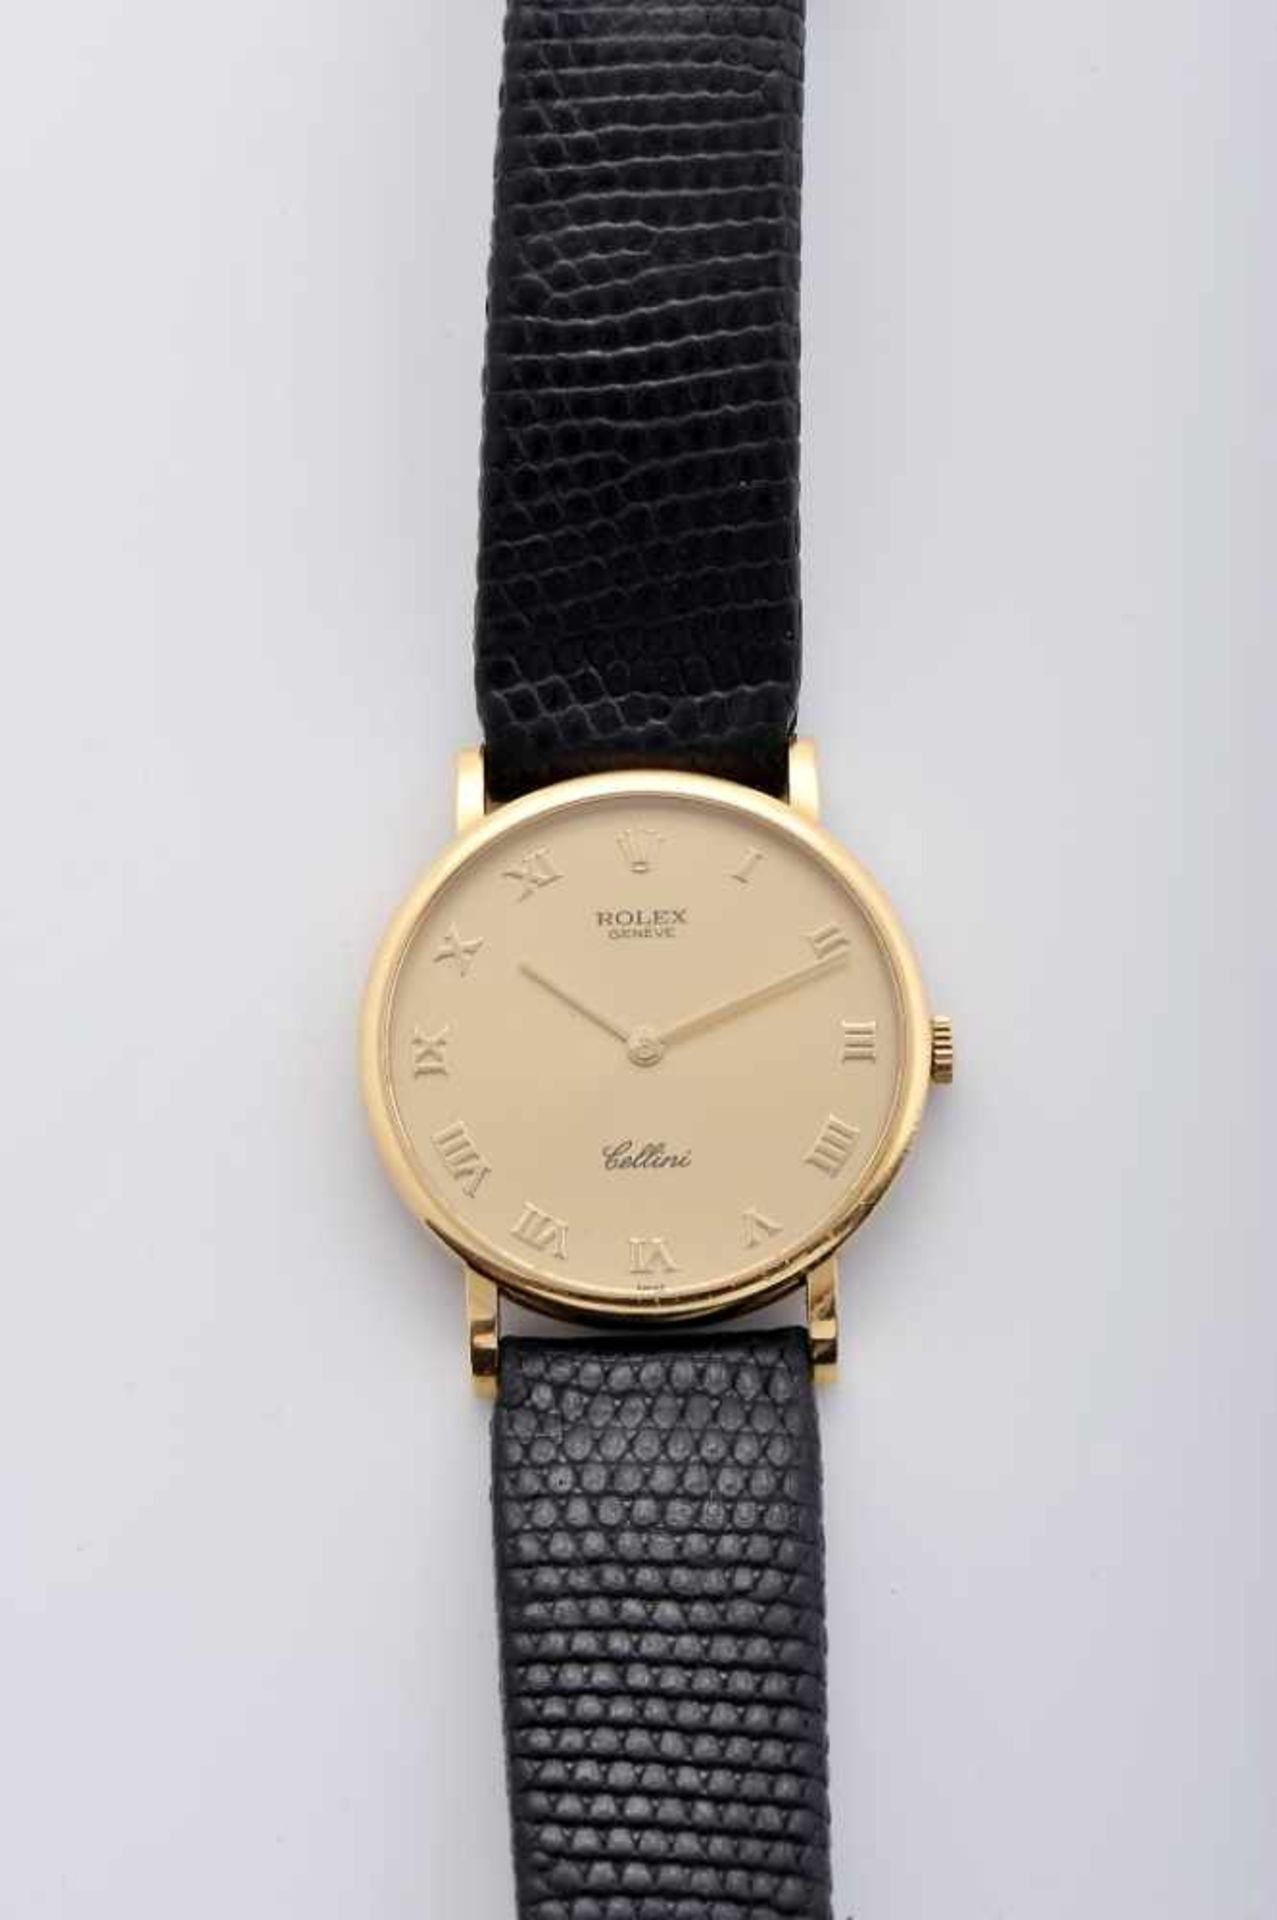 A ROLEX wristwatch, CELLINI modelA ROLEX wristwatch, CELLINI model, 750/1000 gold case nº 440359 and